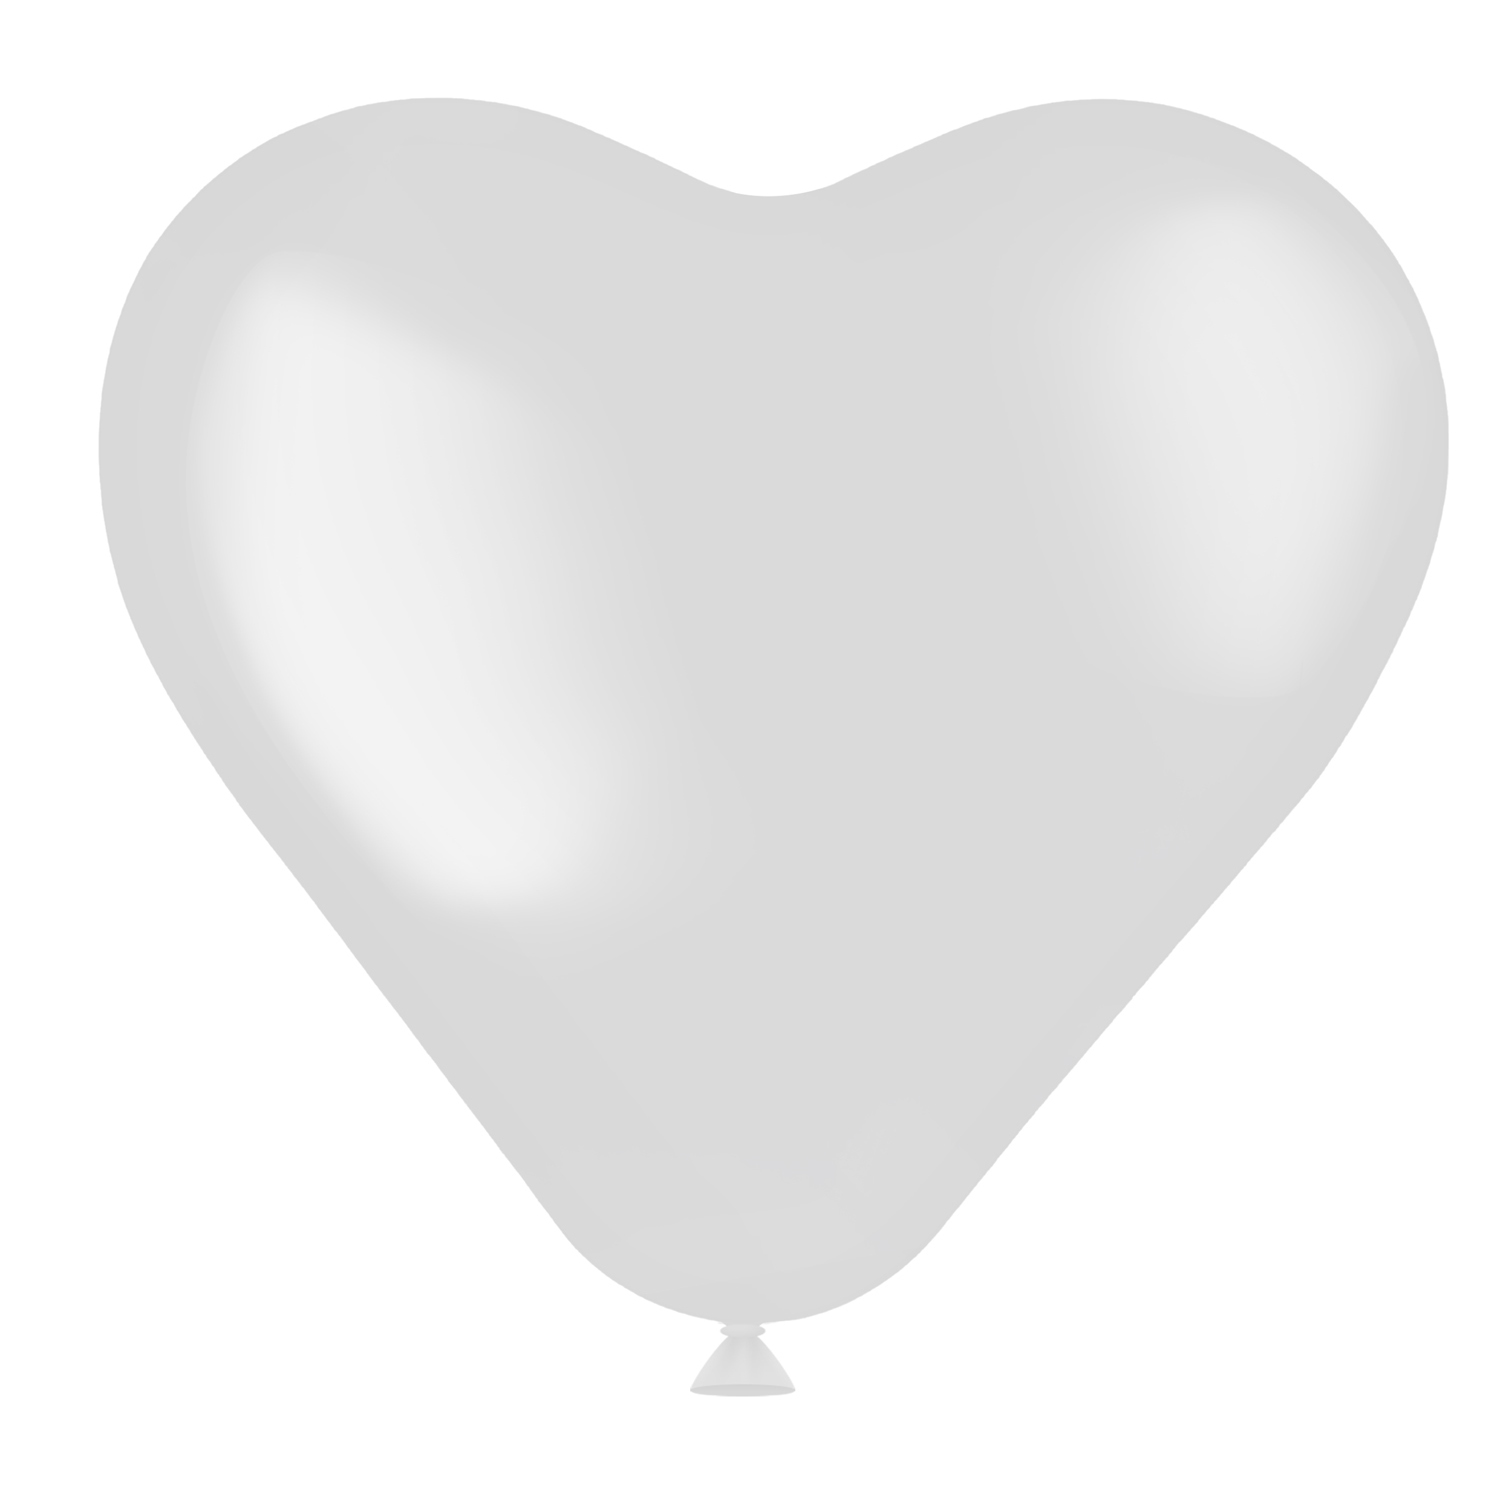 NEU Latex-Luftballons in Herzform, 25cm, weiß, 8 Stück, Herzballons